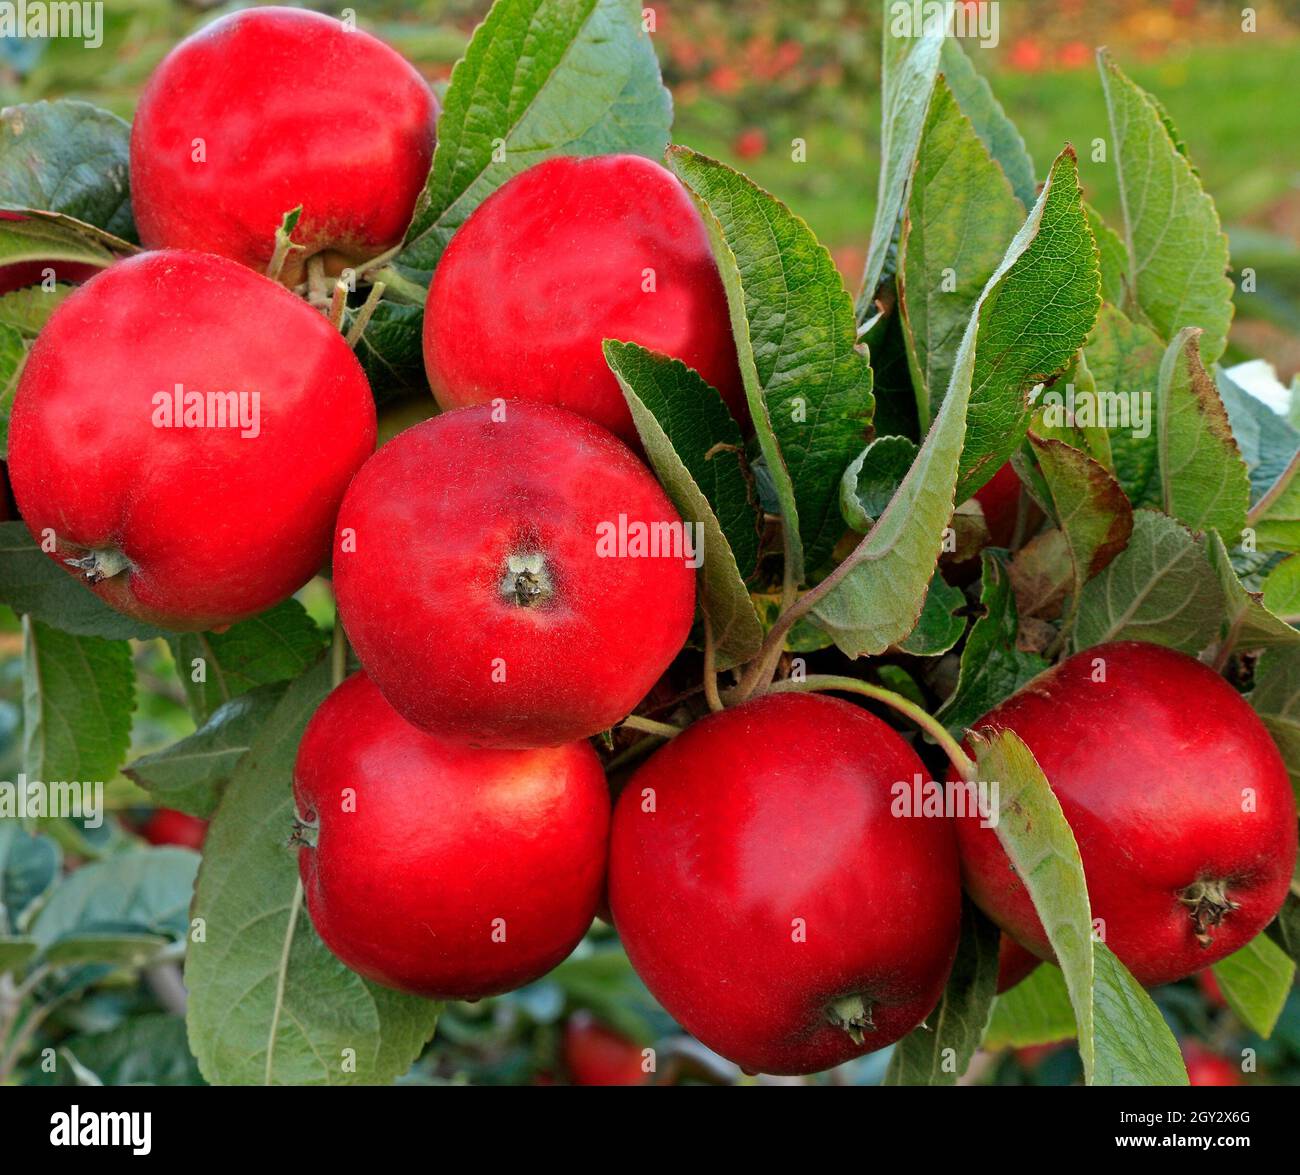 Apple 'Norfolk Royal', farm shop display, apples, fruit, malus domestica, healthy eating Stock Photo